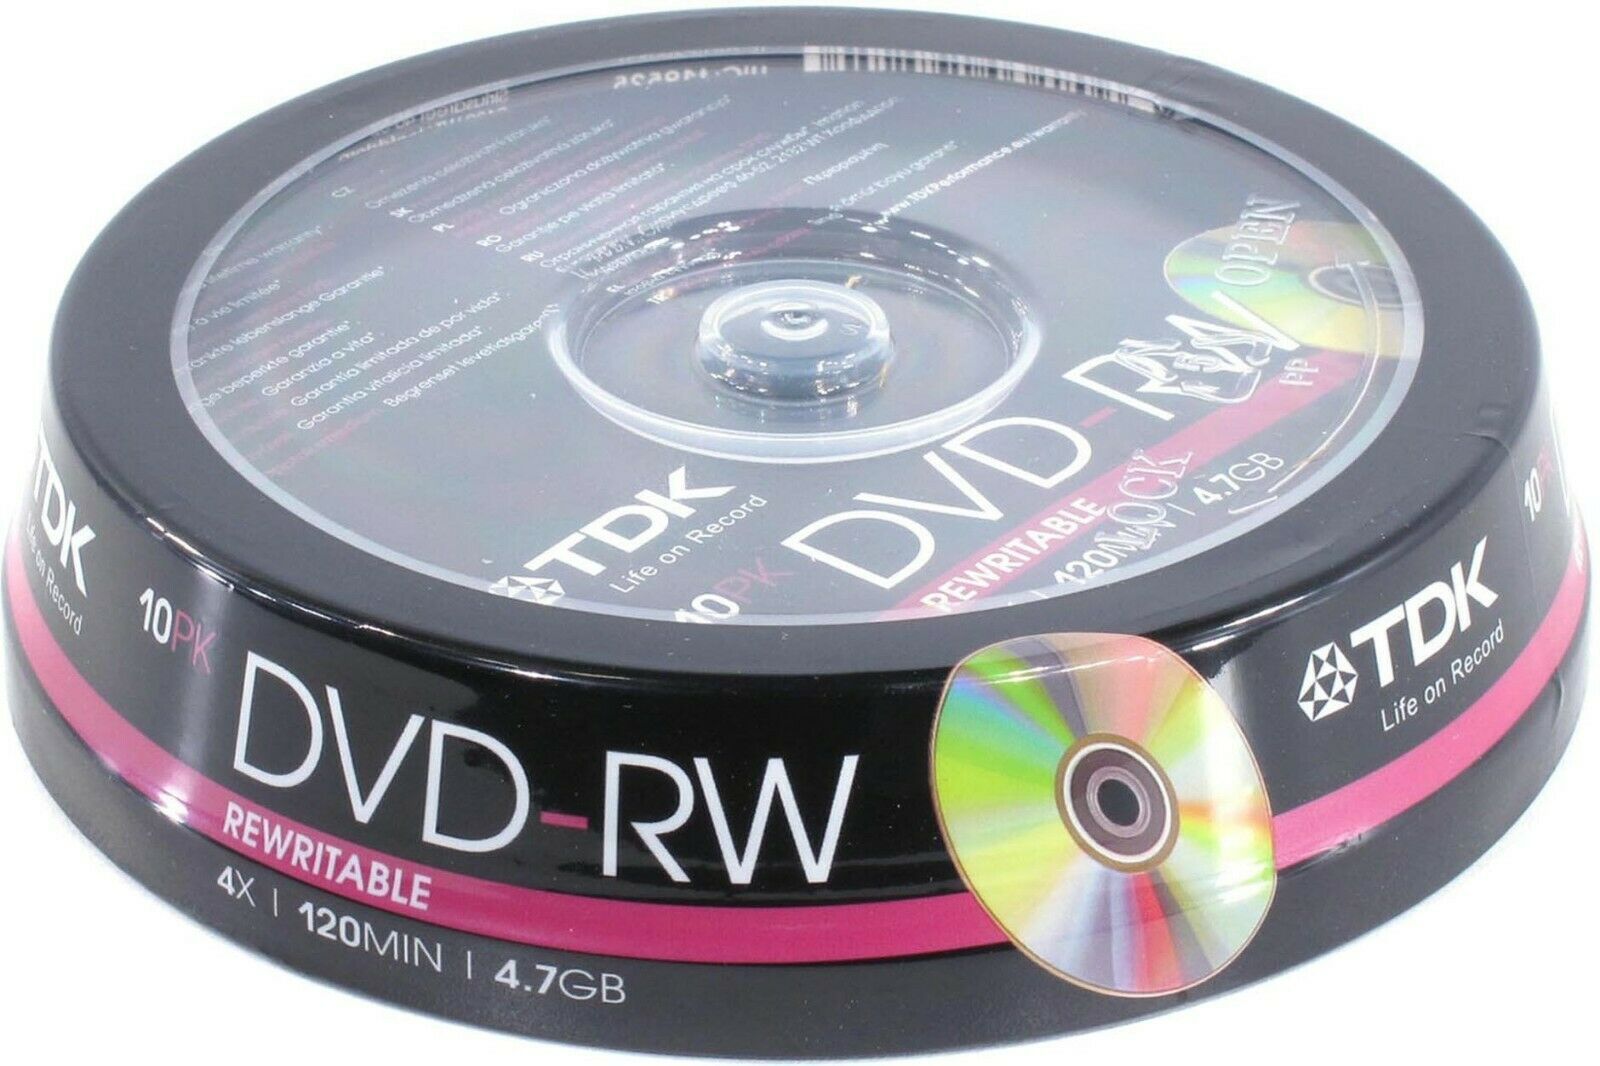 100 X Tdk Blank Dvd Rw Disc 4x 120min 4 7gb Video Data Re Writable Cd